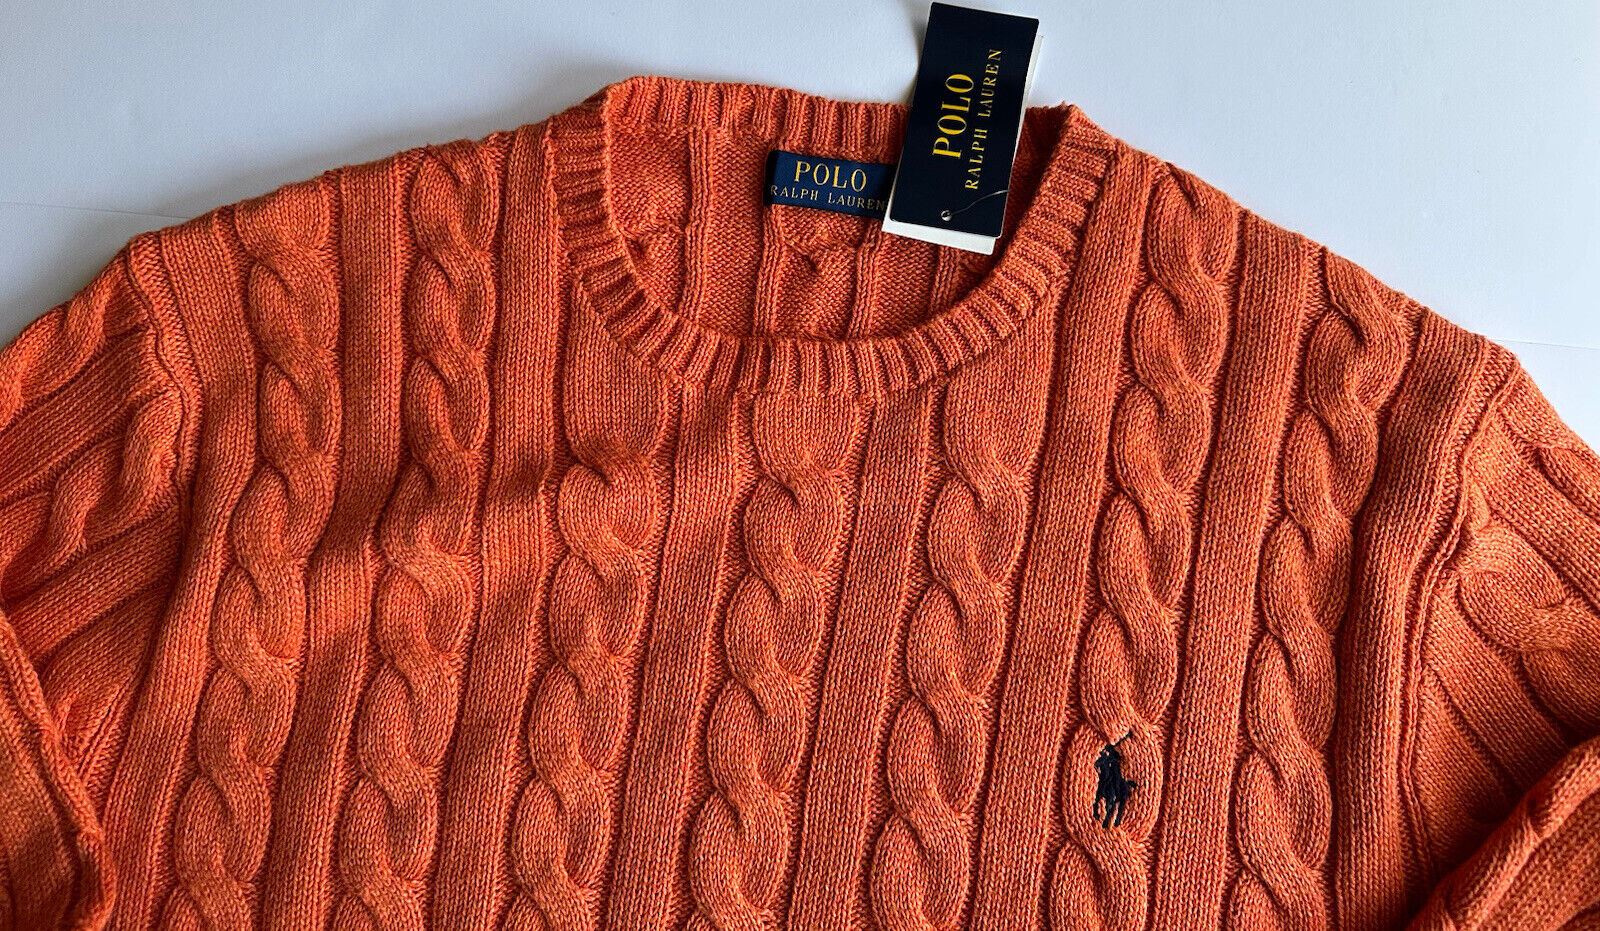 NWT $138 Polo Ralph Lauren Men's Knit Sweater Orange XL/TG